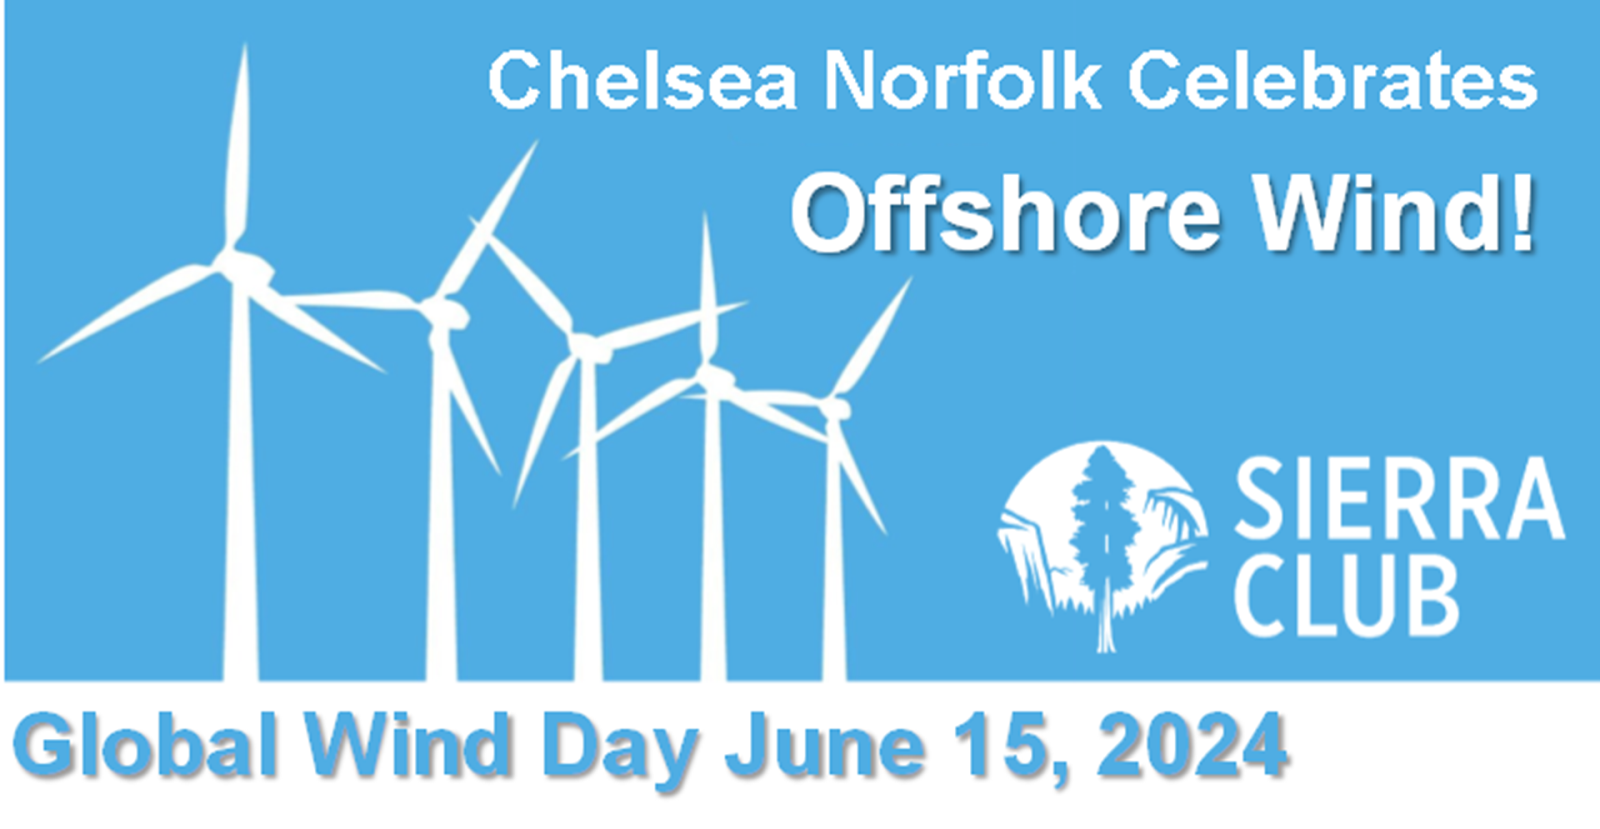 Chelsea Norfolk Celebrates Offshore Wind! Global Wind Day June 15th, 2024